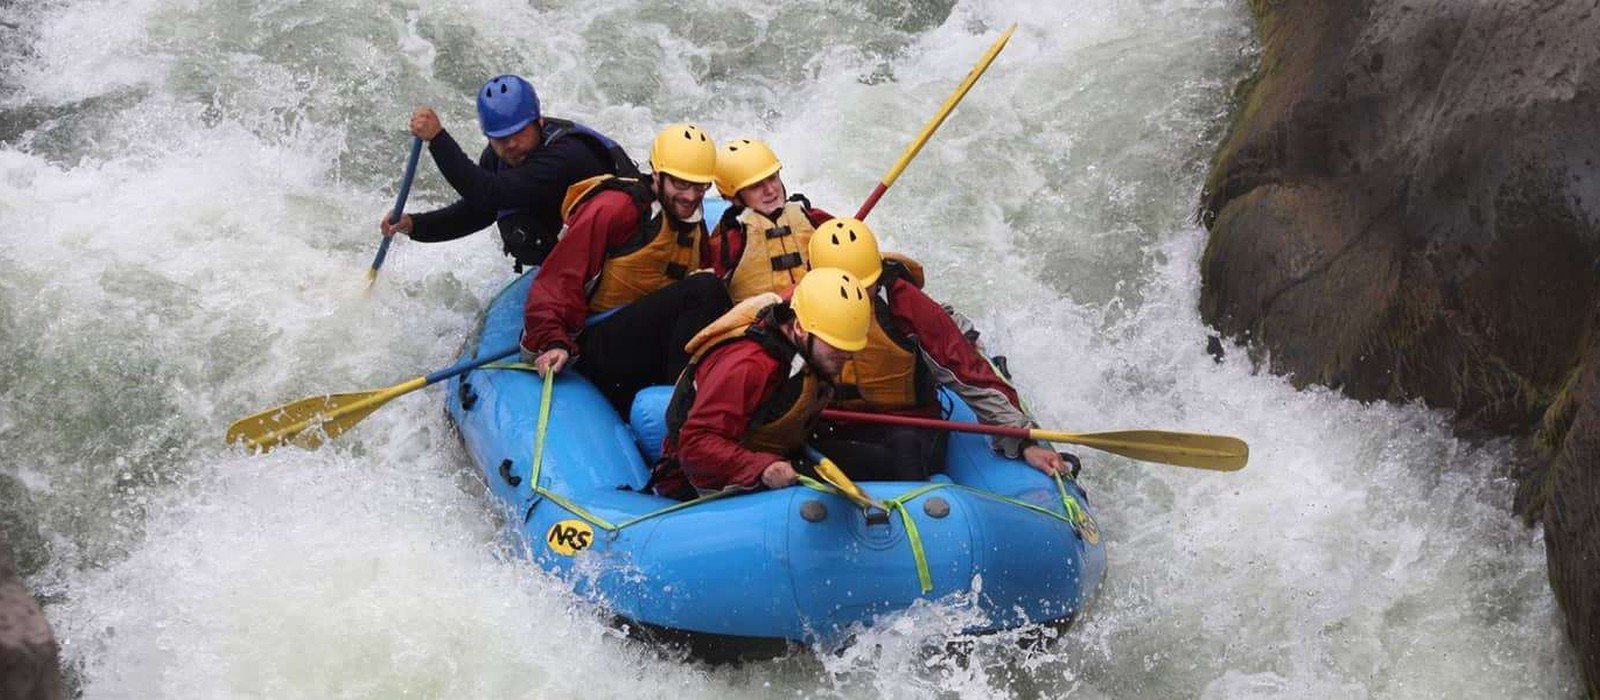 Rafting Chili River